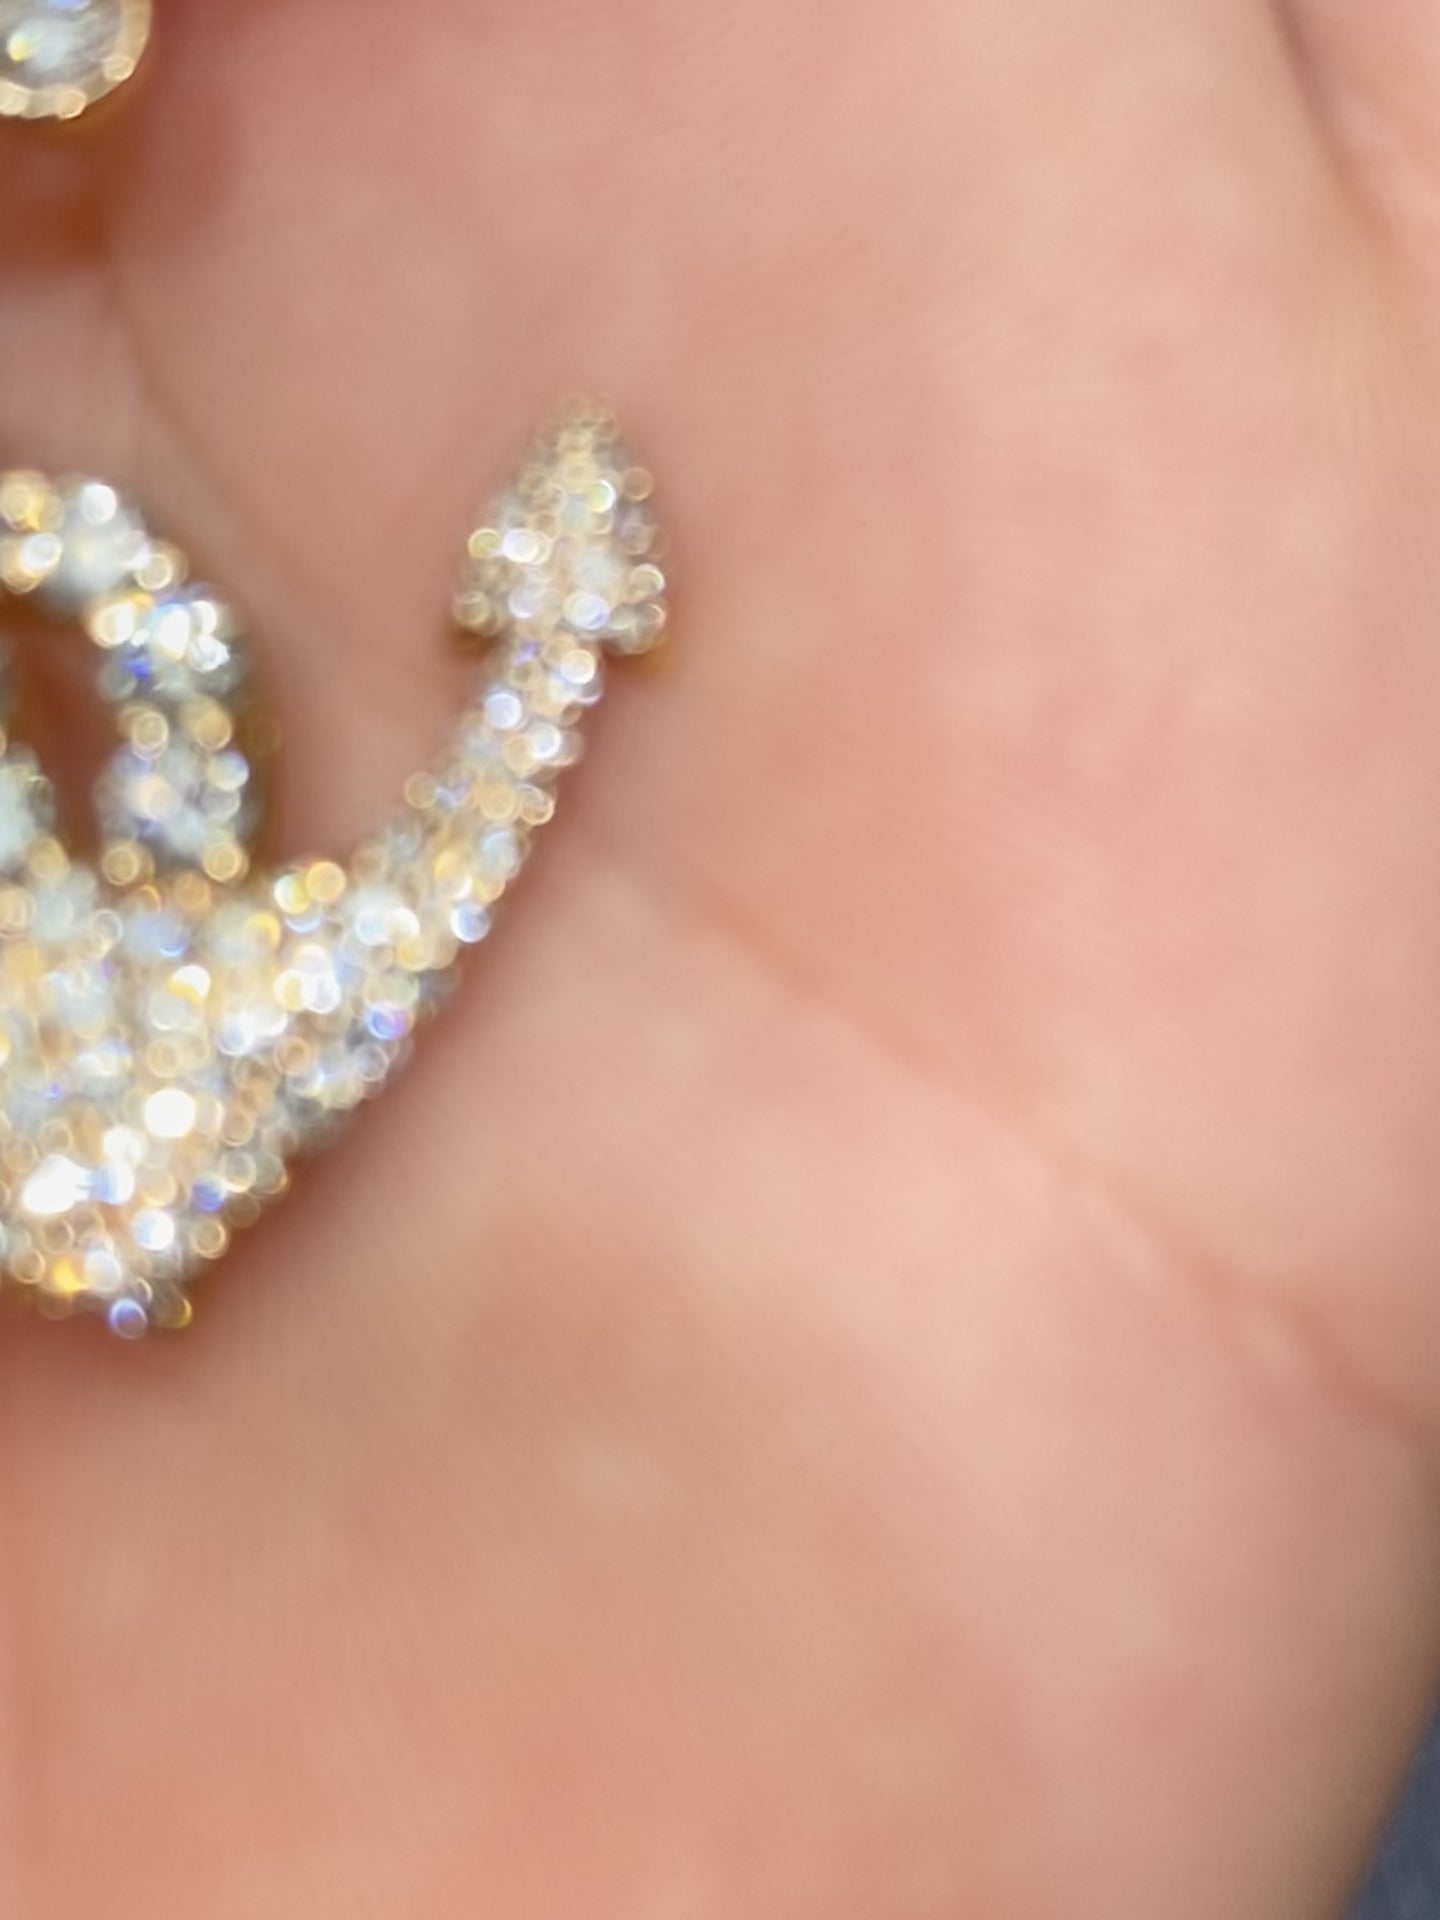 New 14k Anchor Pendant VS-1 natural diamonds 3 cts.t.w. 14k 10.6 grams